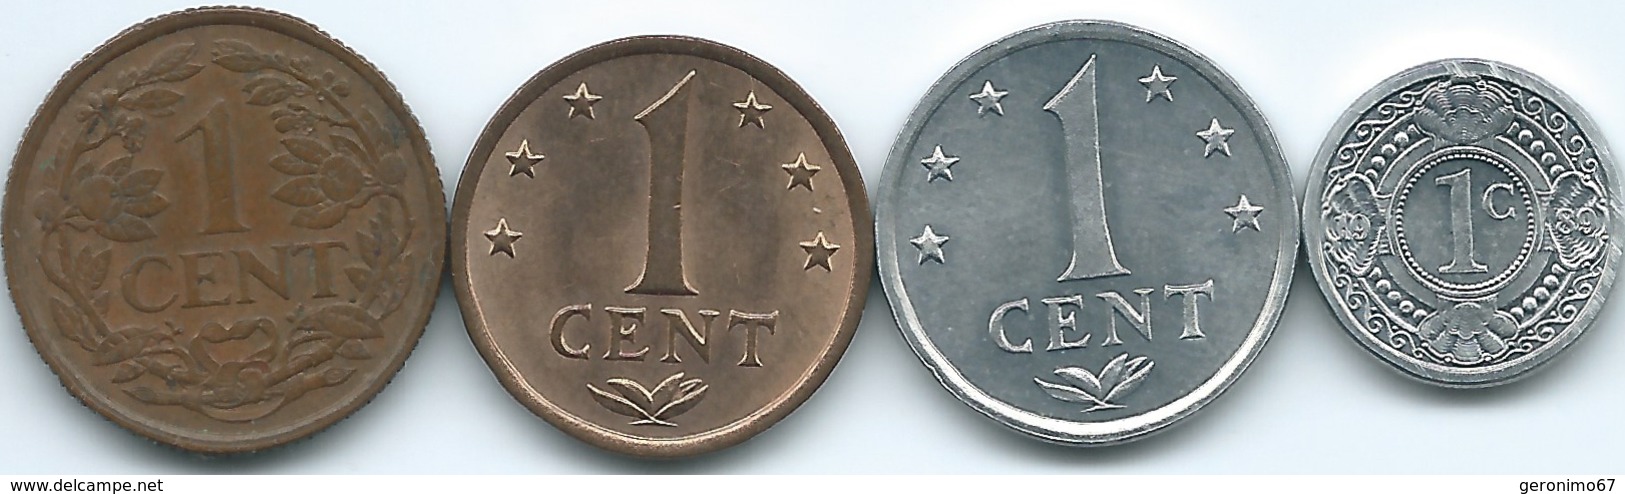 Netherlands Antilles - 1 Cent - 1959 (KM1) 1970 (KM8) 1984 (KM8a) & 1989 (KM32) - Nederlandse Antillen